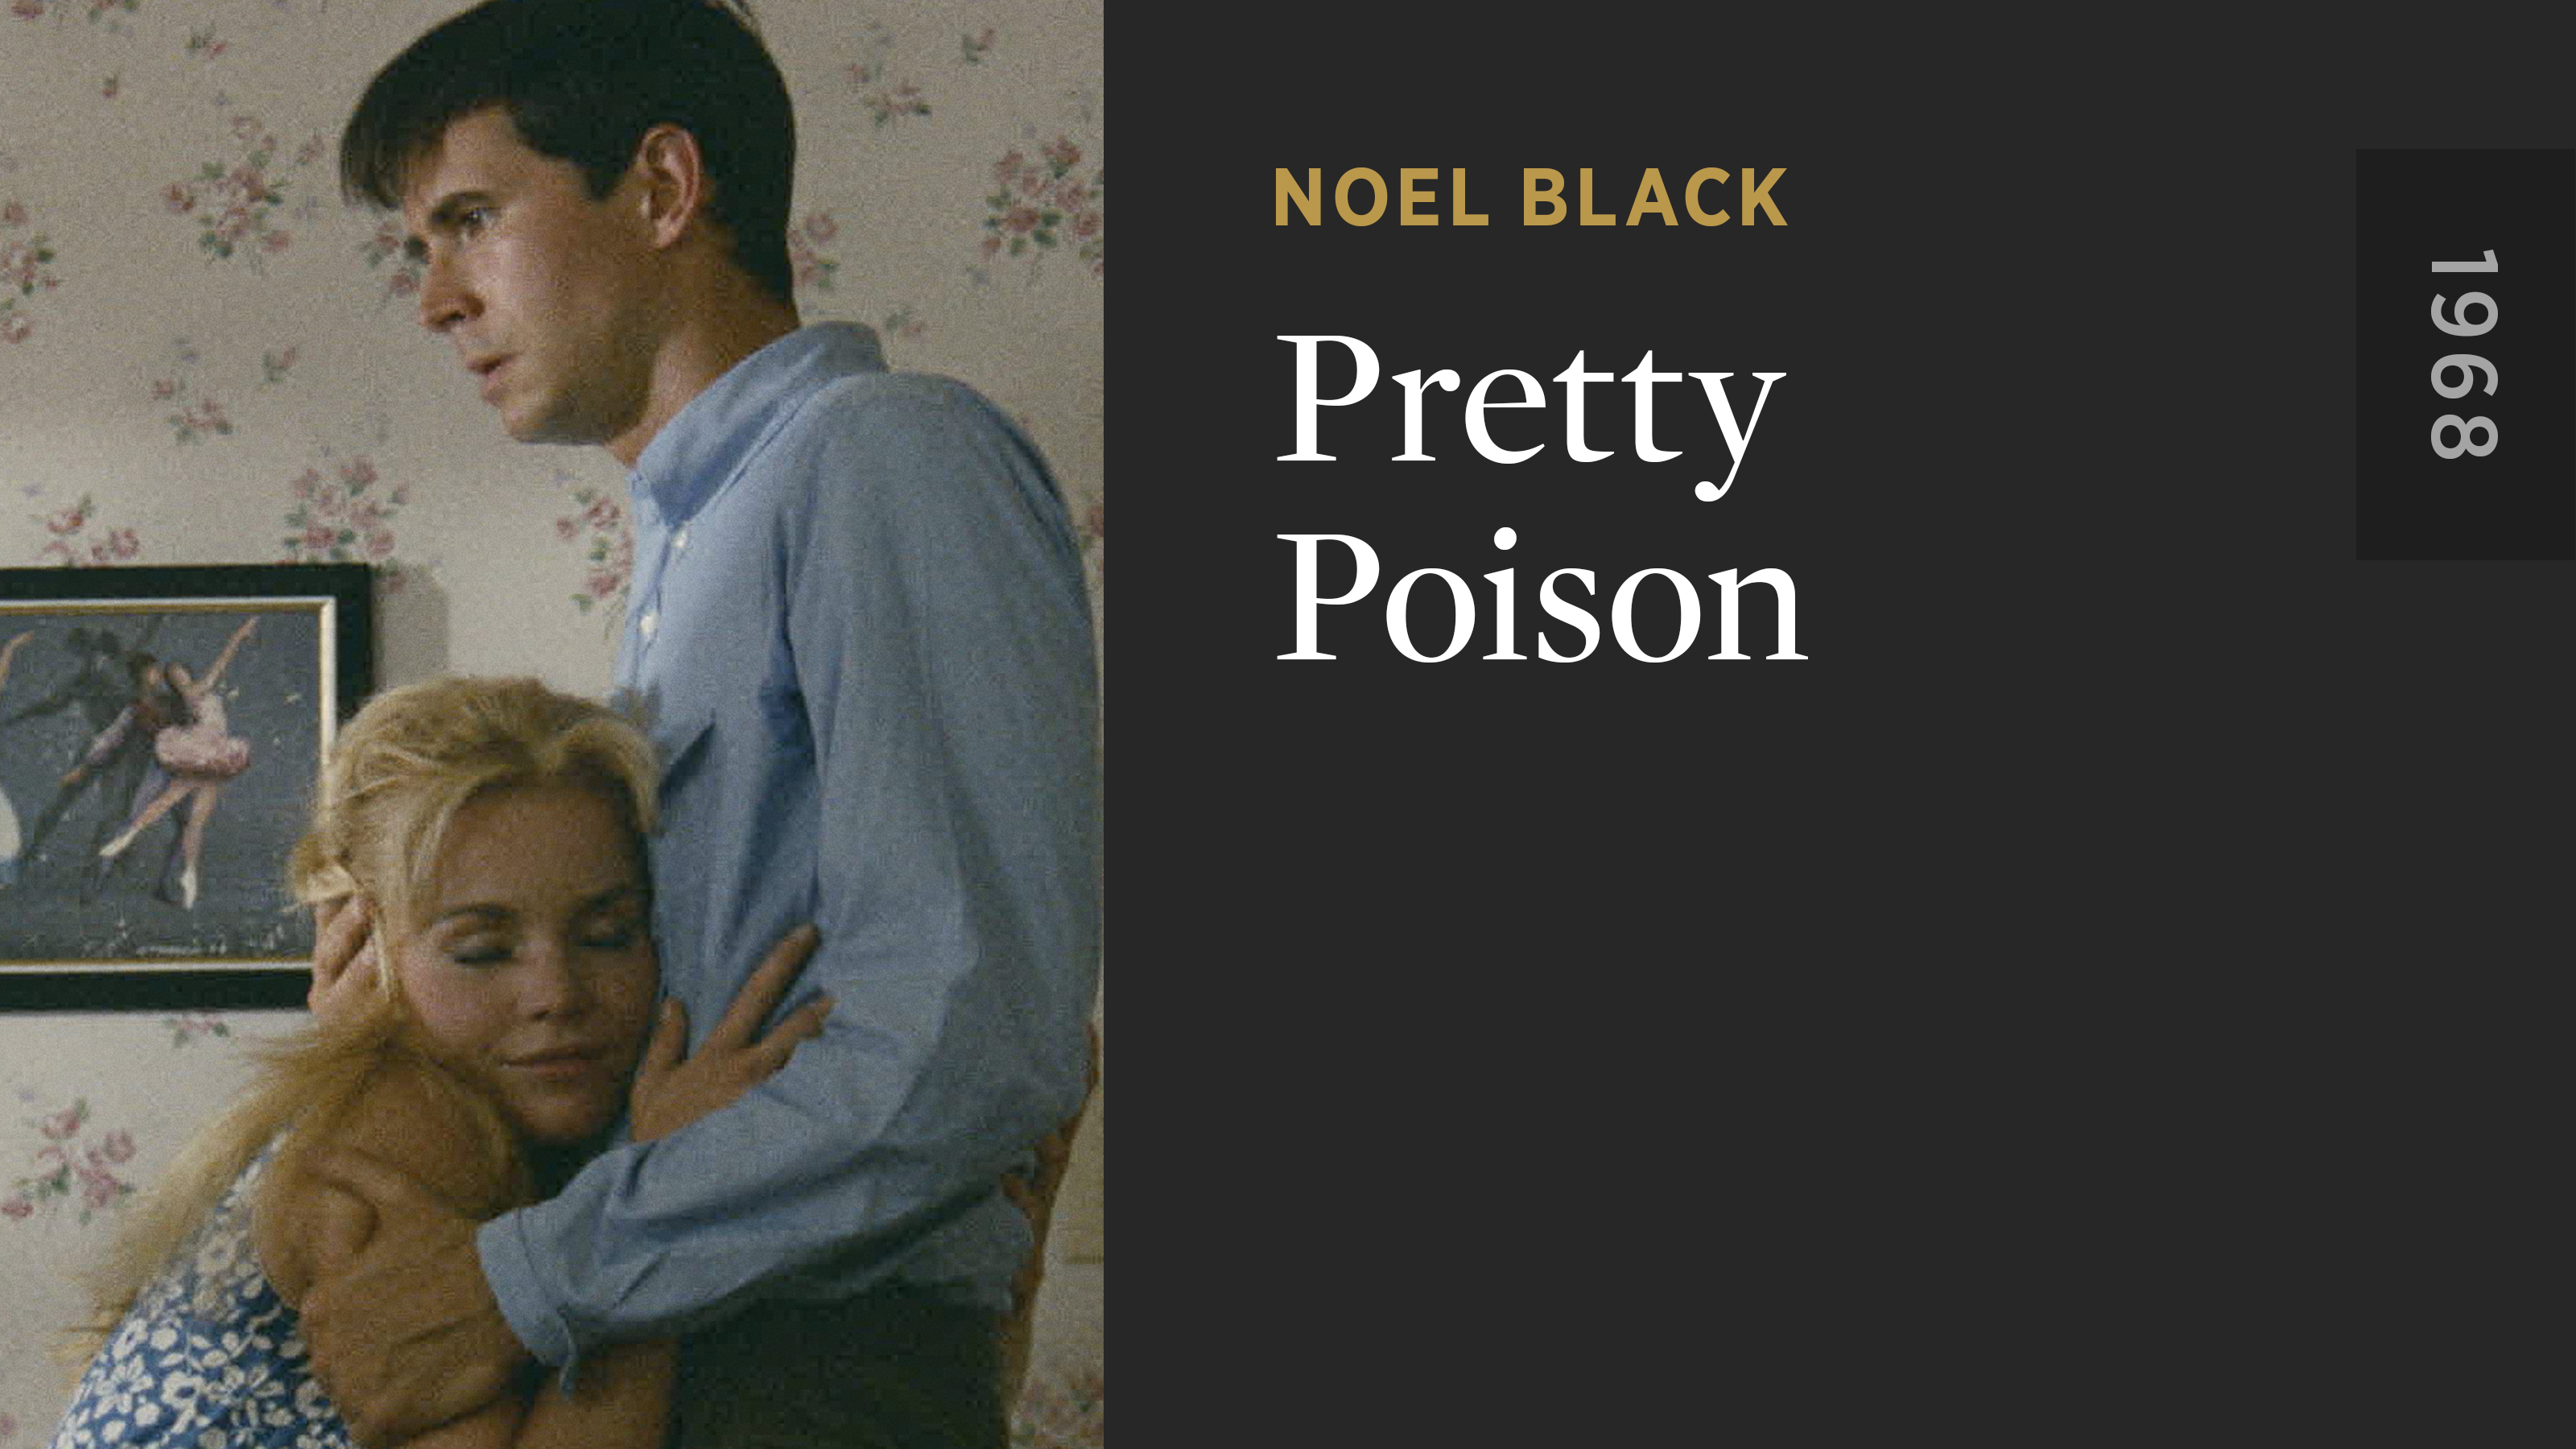 Pretty Poison - The Criterion Channel